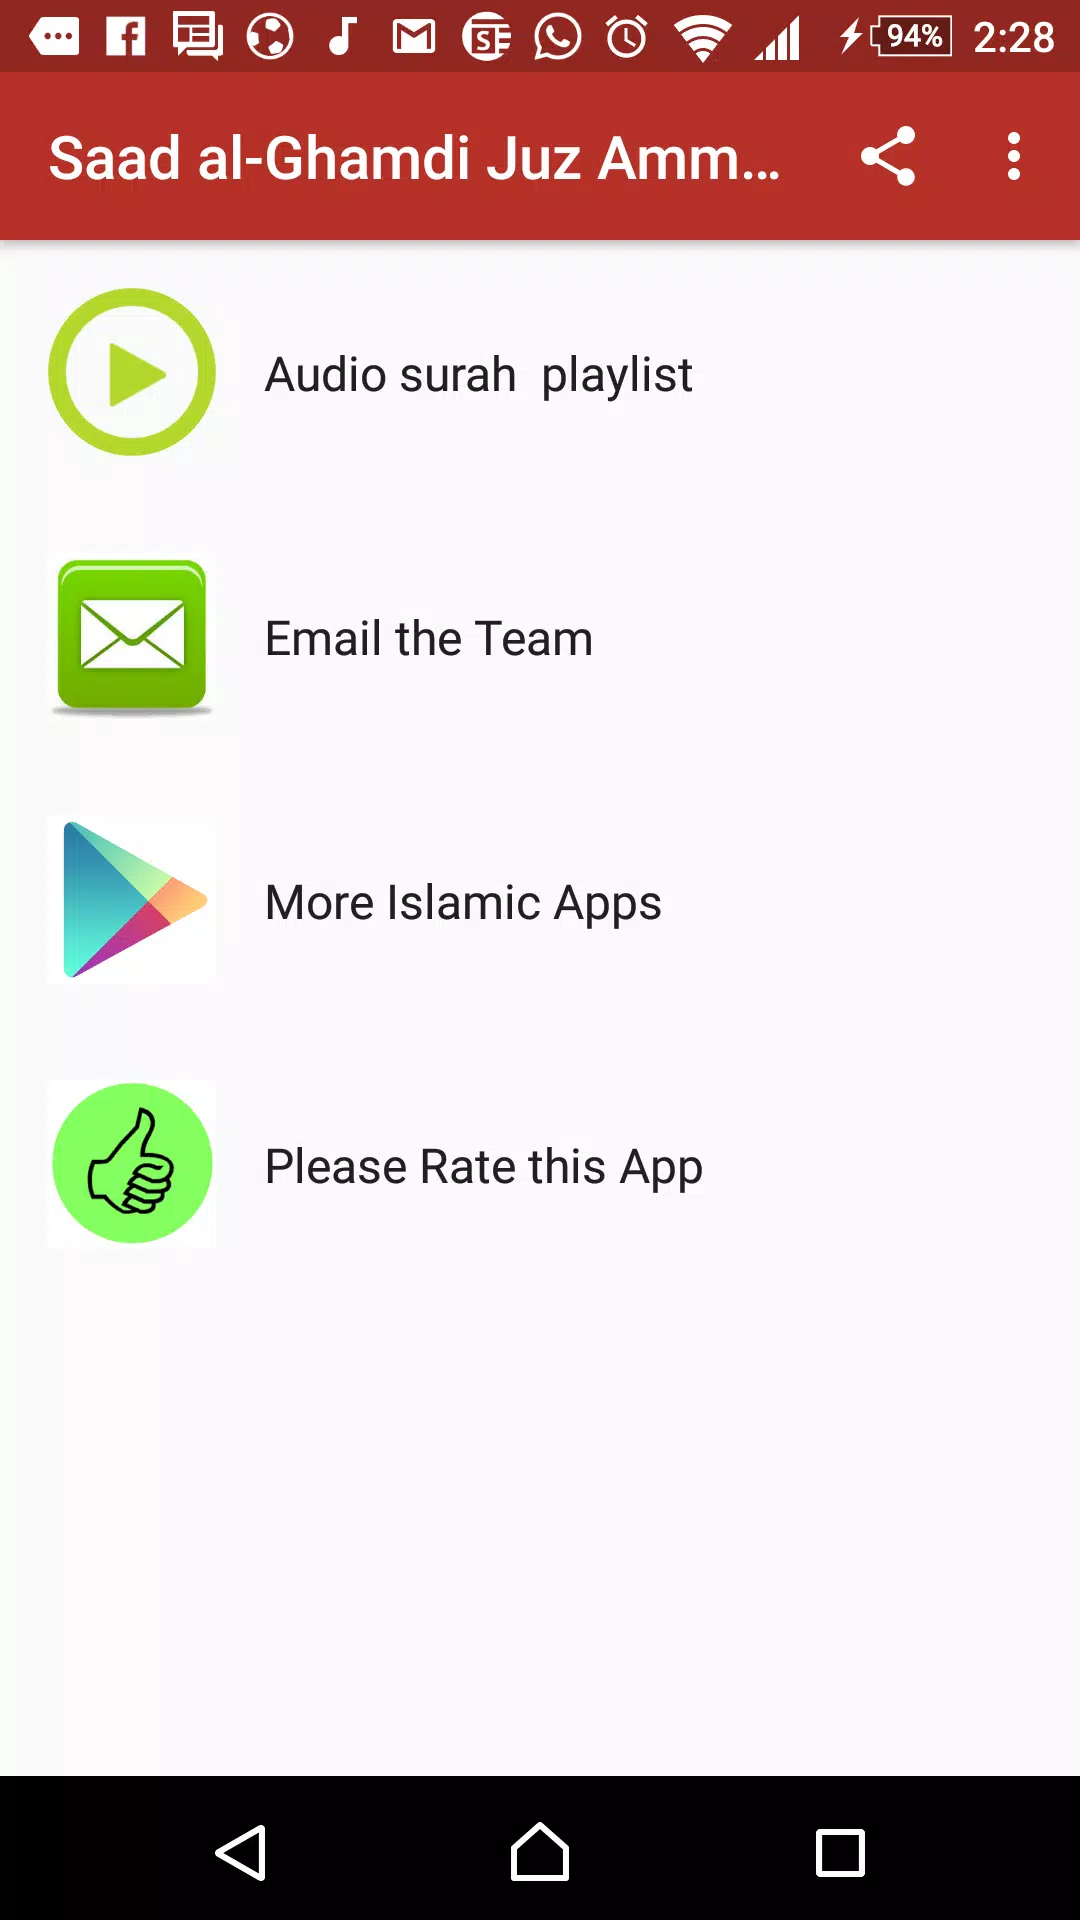 Saad al-Ghamdi Juz Amma Quran APK for Android Download